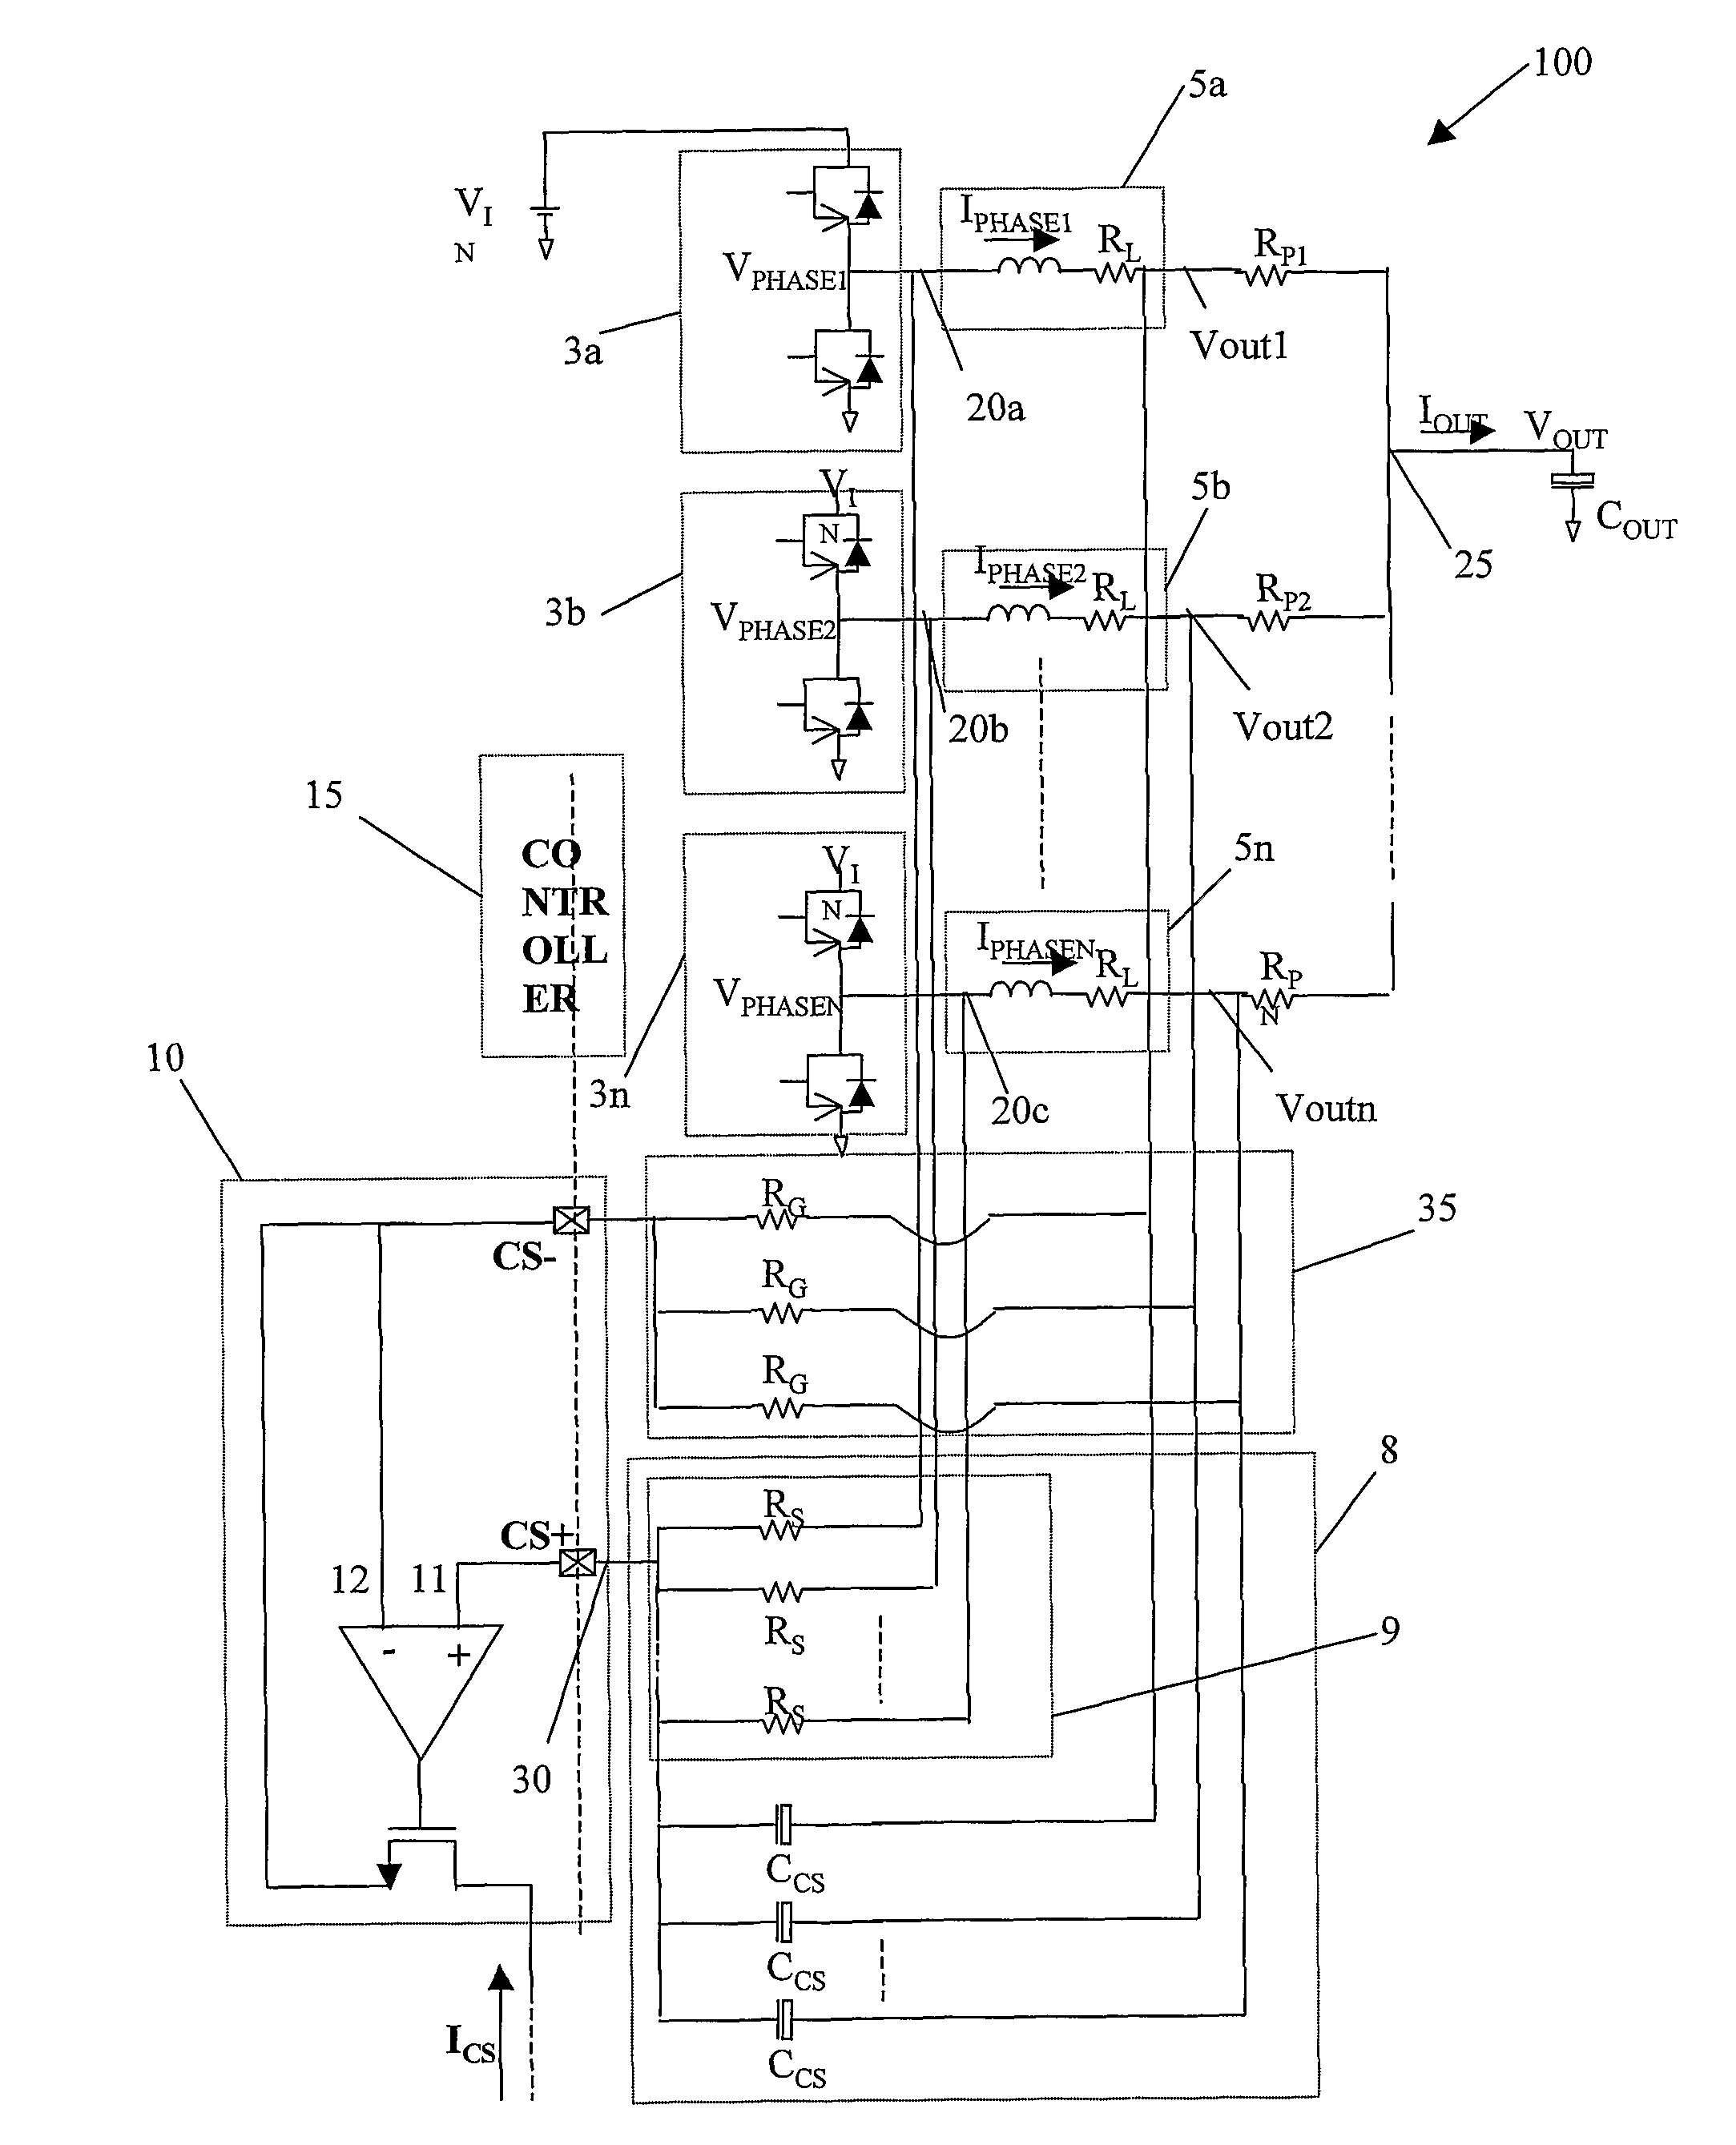 Multi-phase voltage regulator